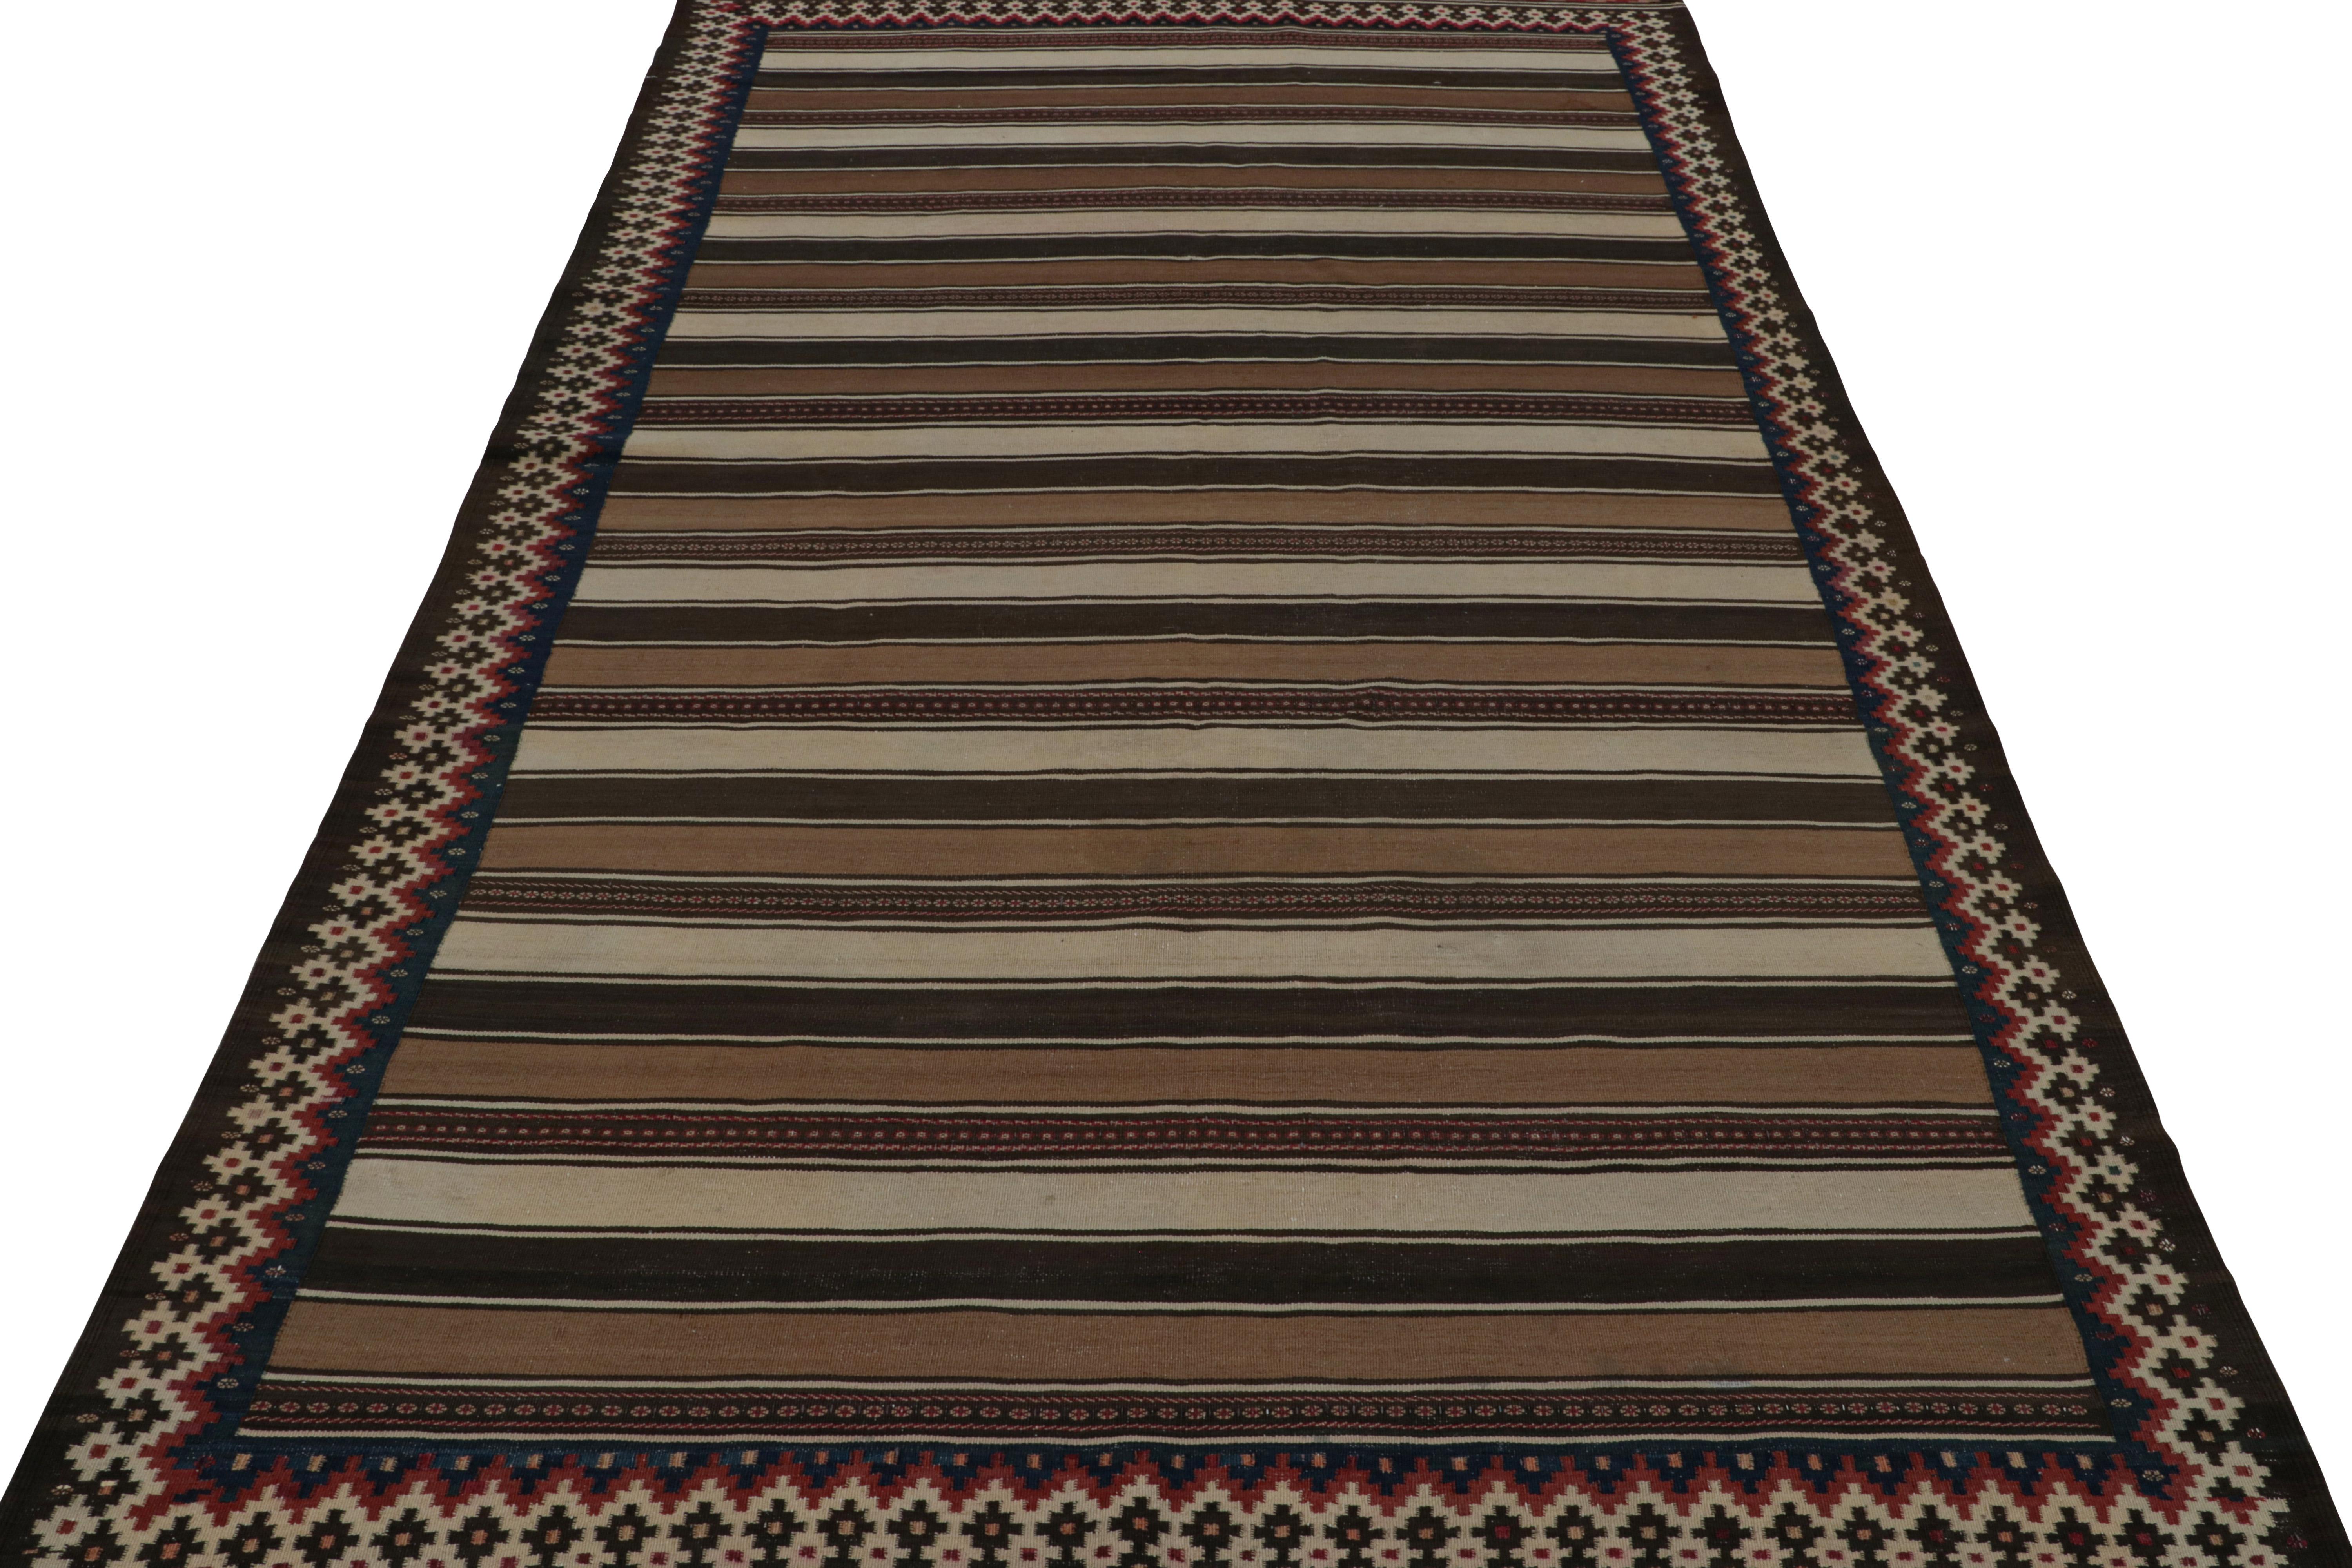 Hand-Woven Vintage Afghan Tribal Kilim rug, with Beige/Brown Stripes, from Rug & Kilim For Sale